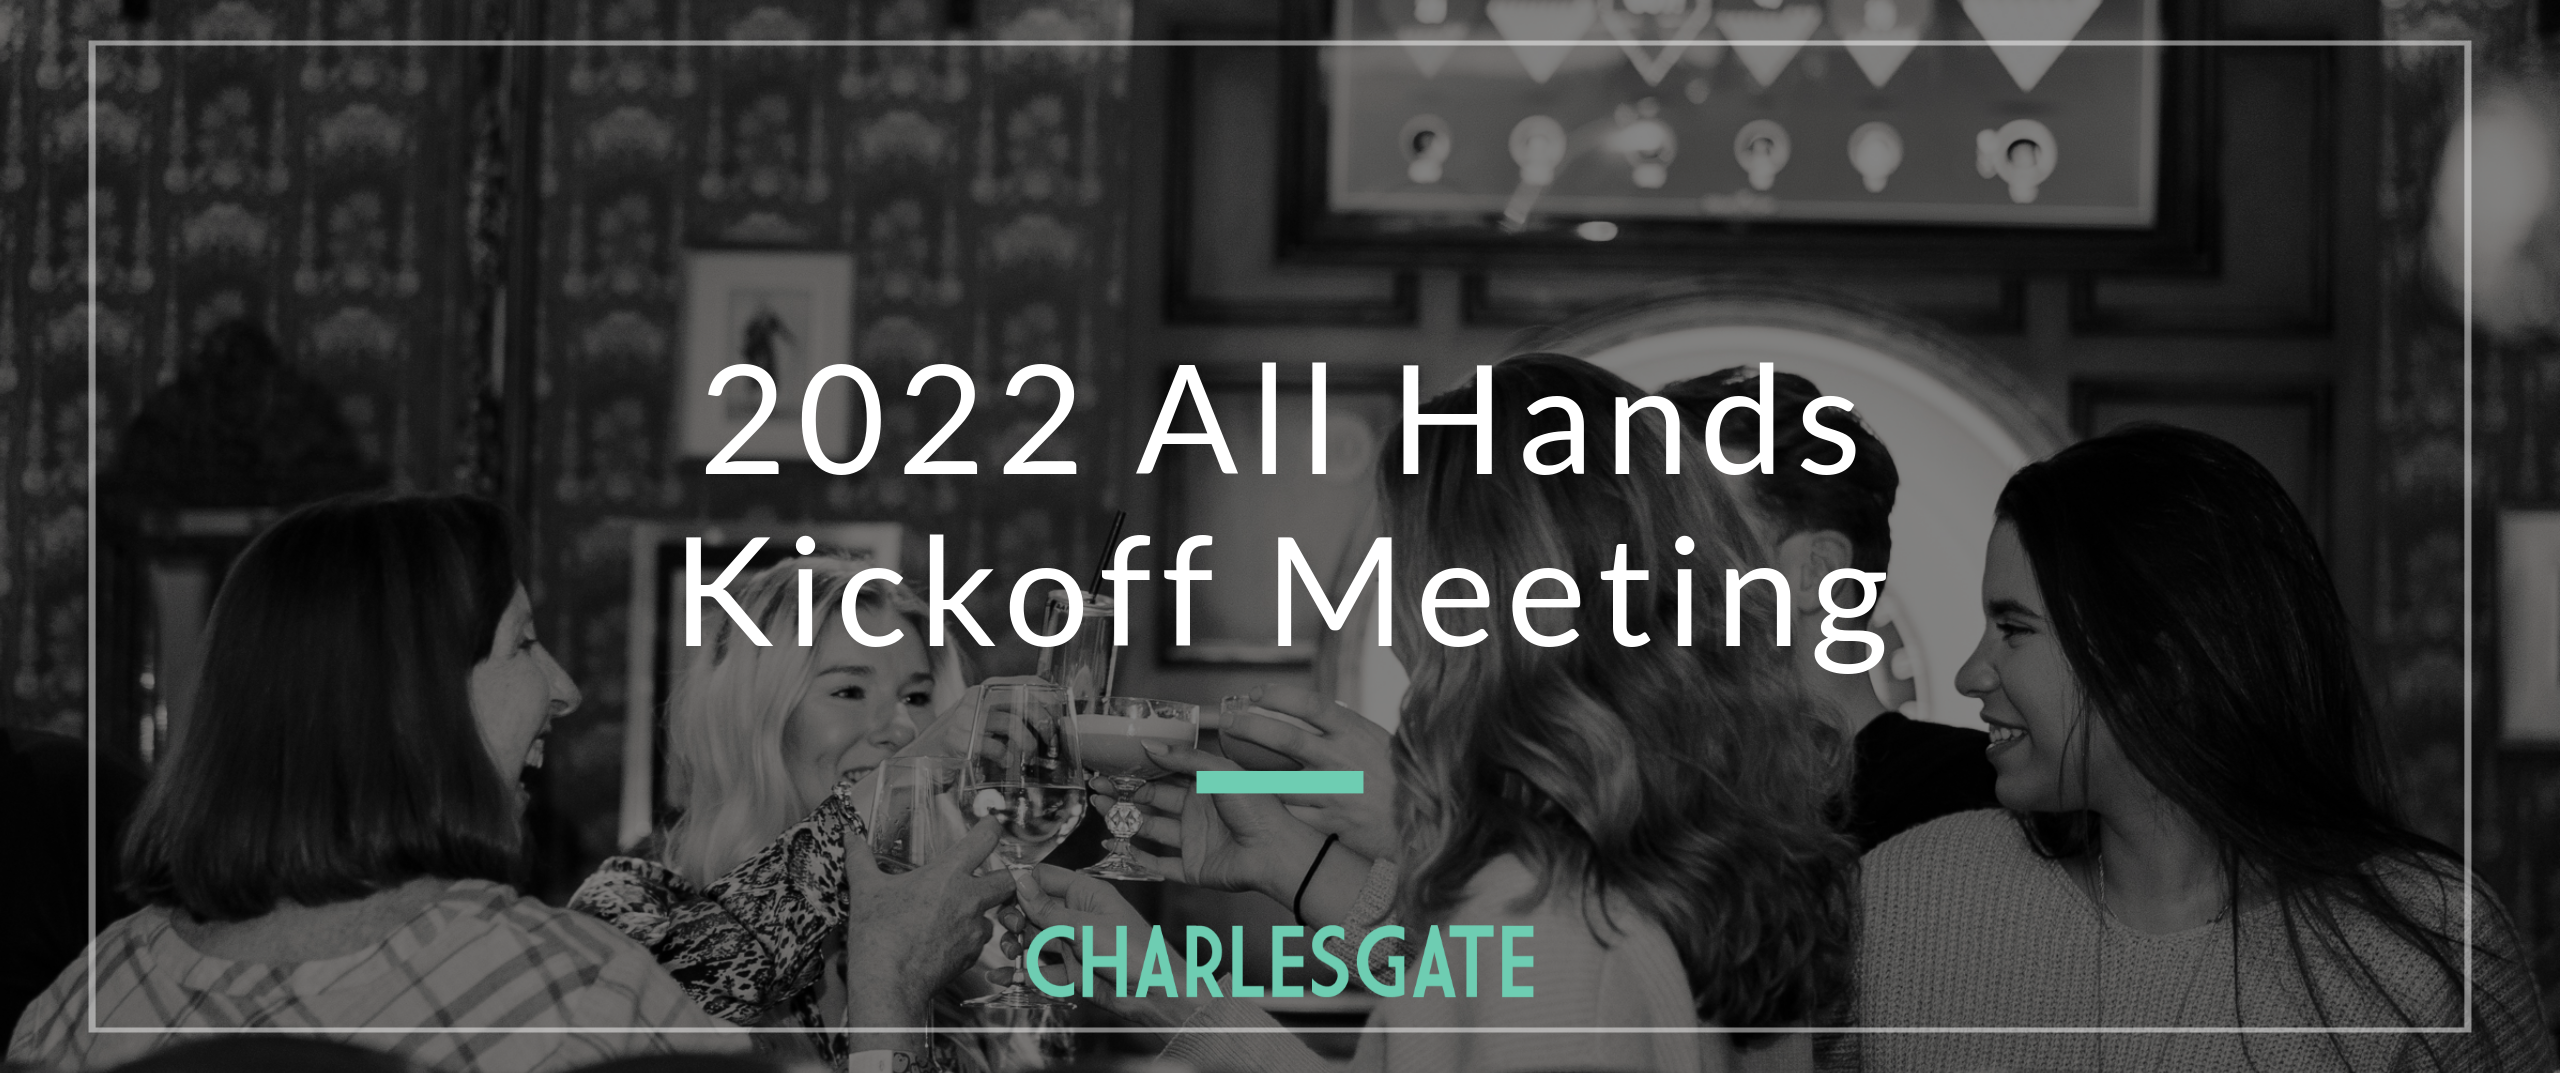 2022 All Hands Kickoff Meeting